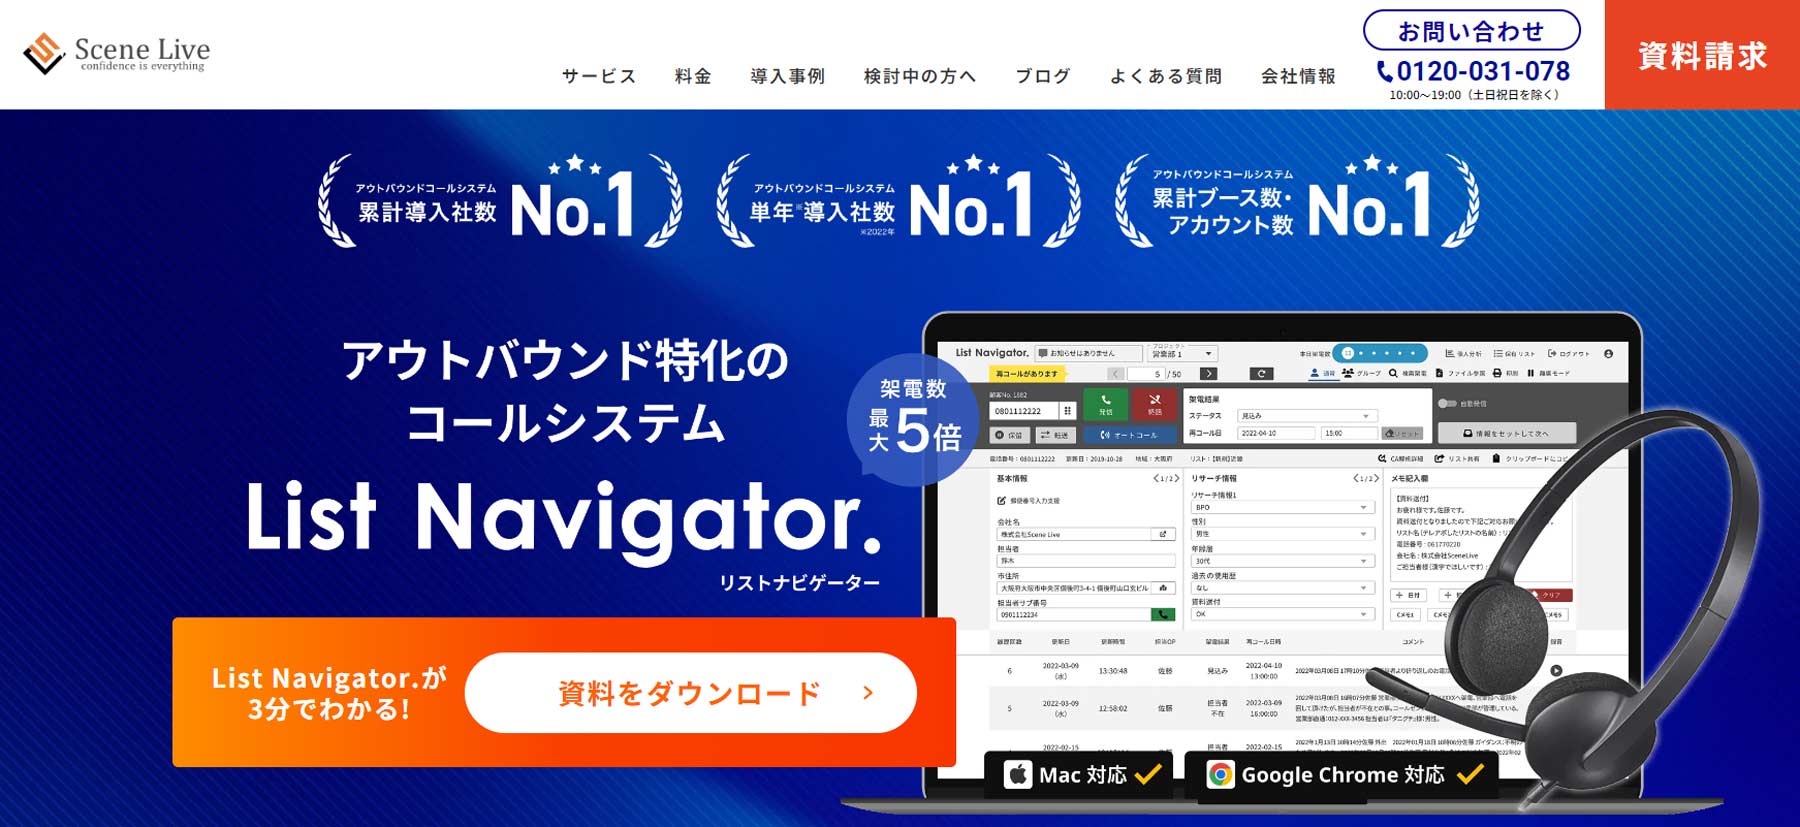 List Navigator.公式Webサイト